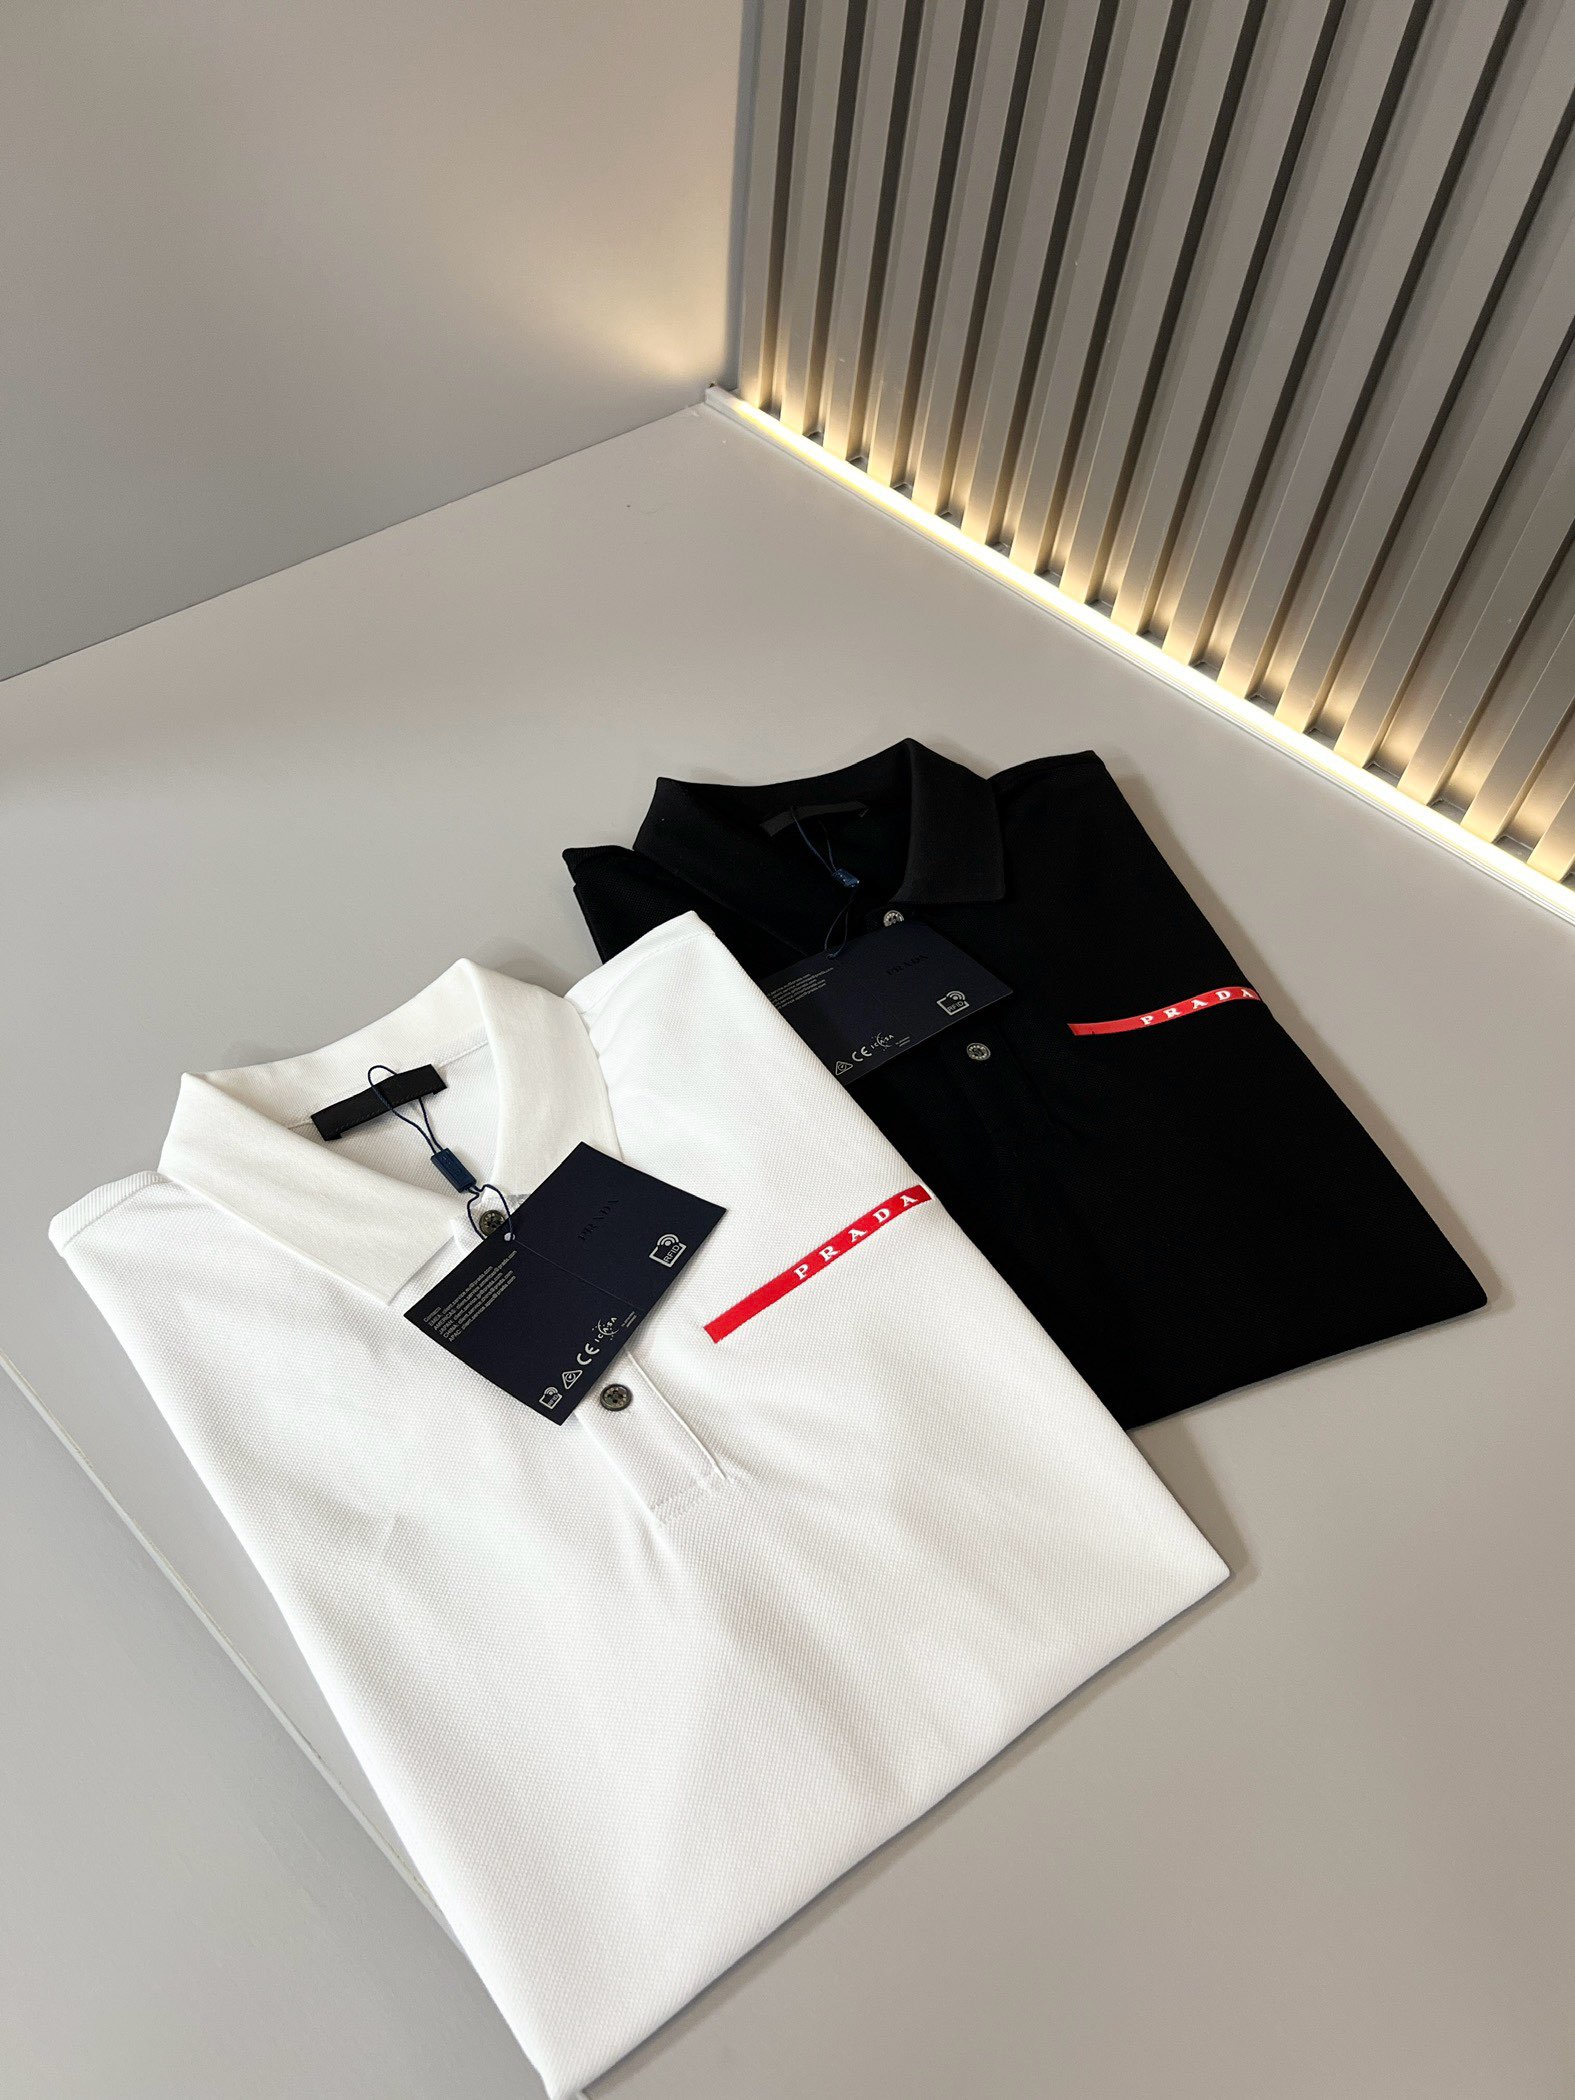 Prada Clothing Polo T-Shirt Black White Cotton Spring/Summer Collection Fashion Short Sleeve